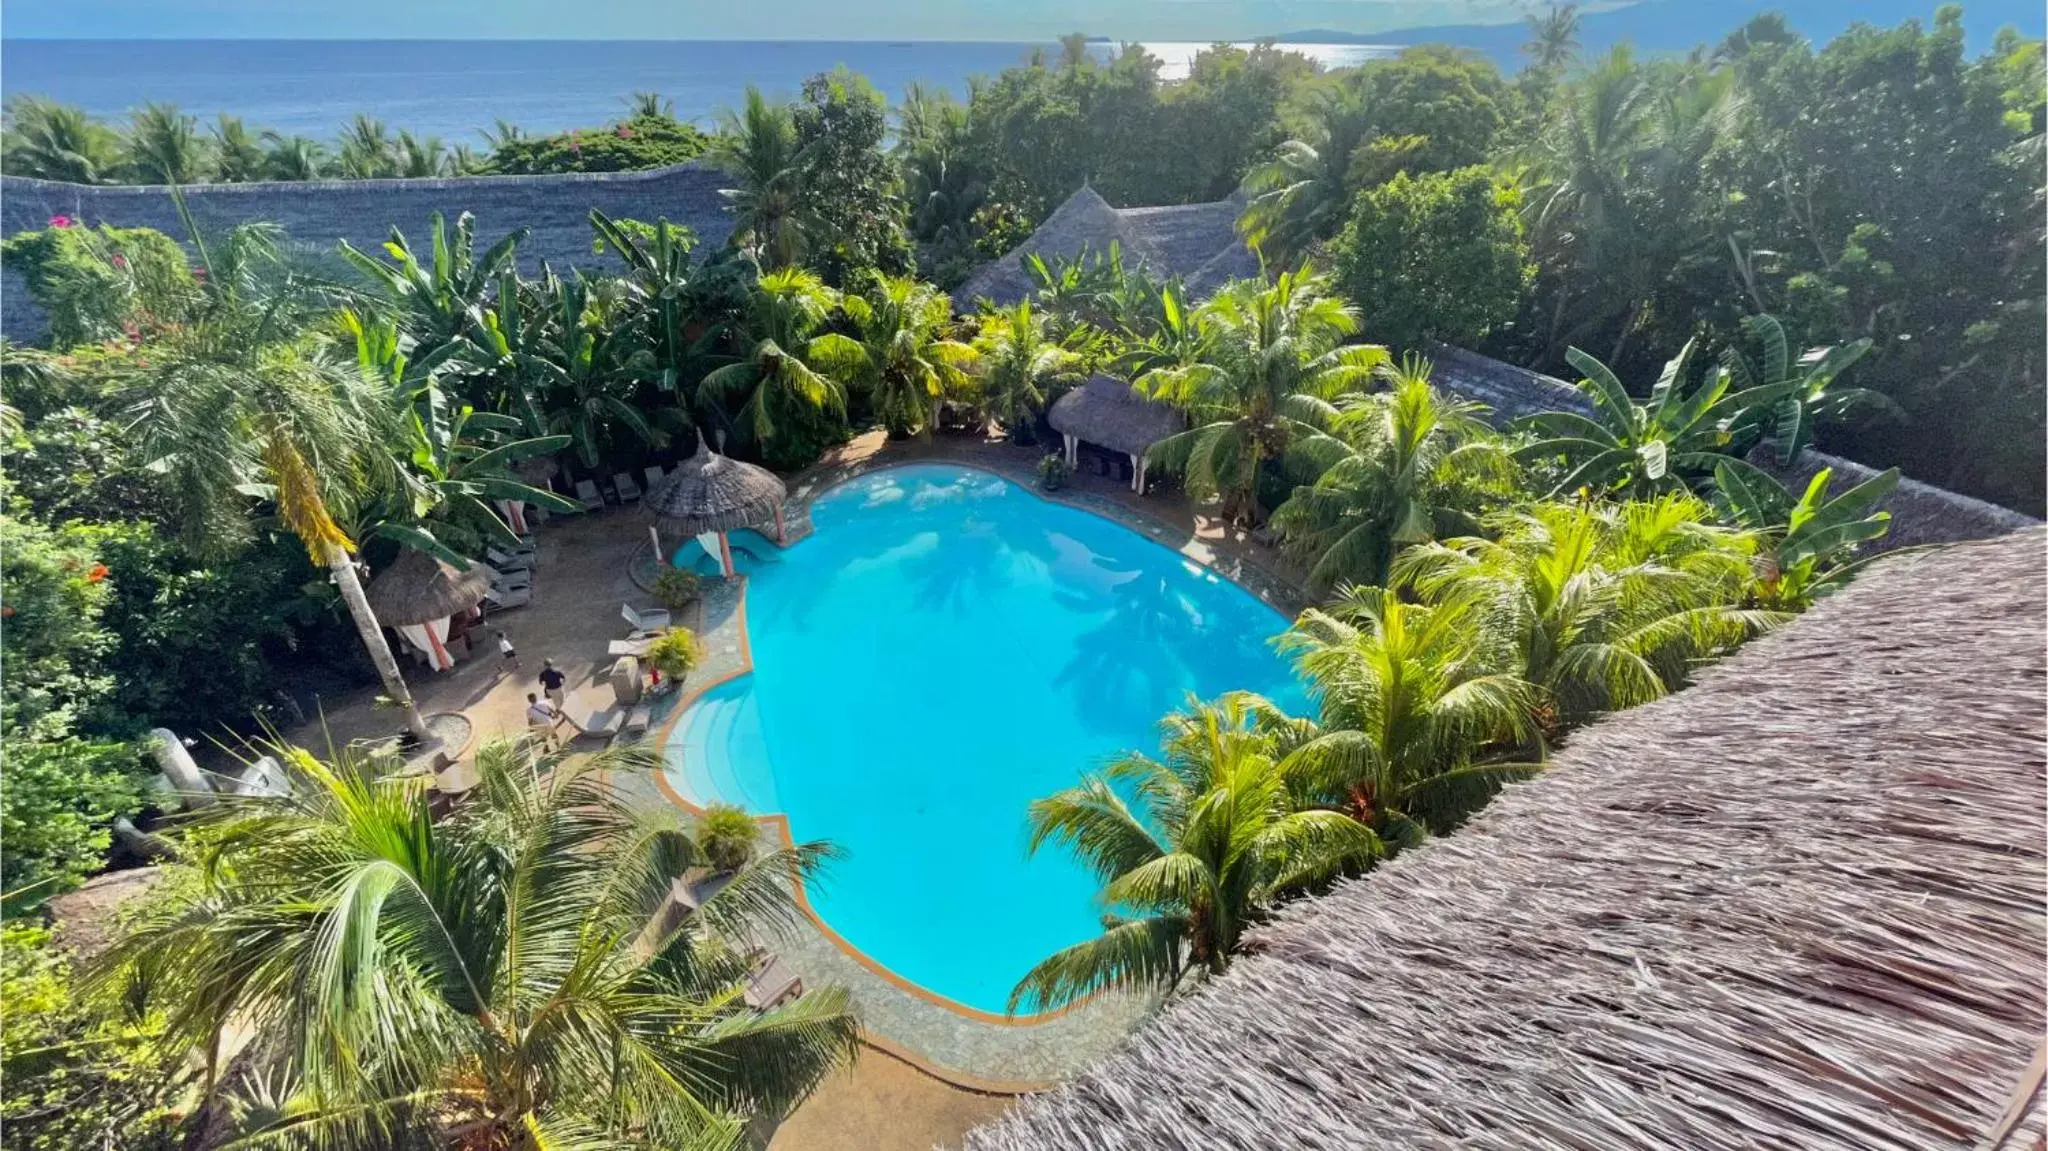 Pool View in Coco Grove Beach Resort, Siquijor Island